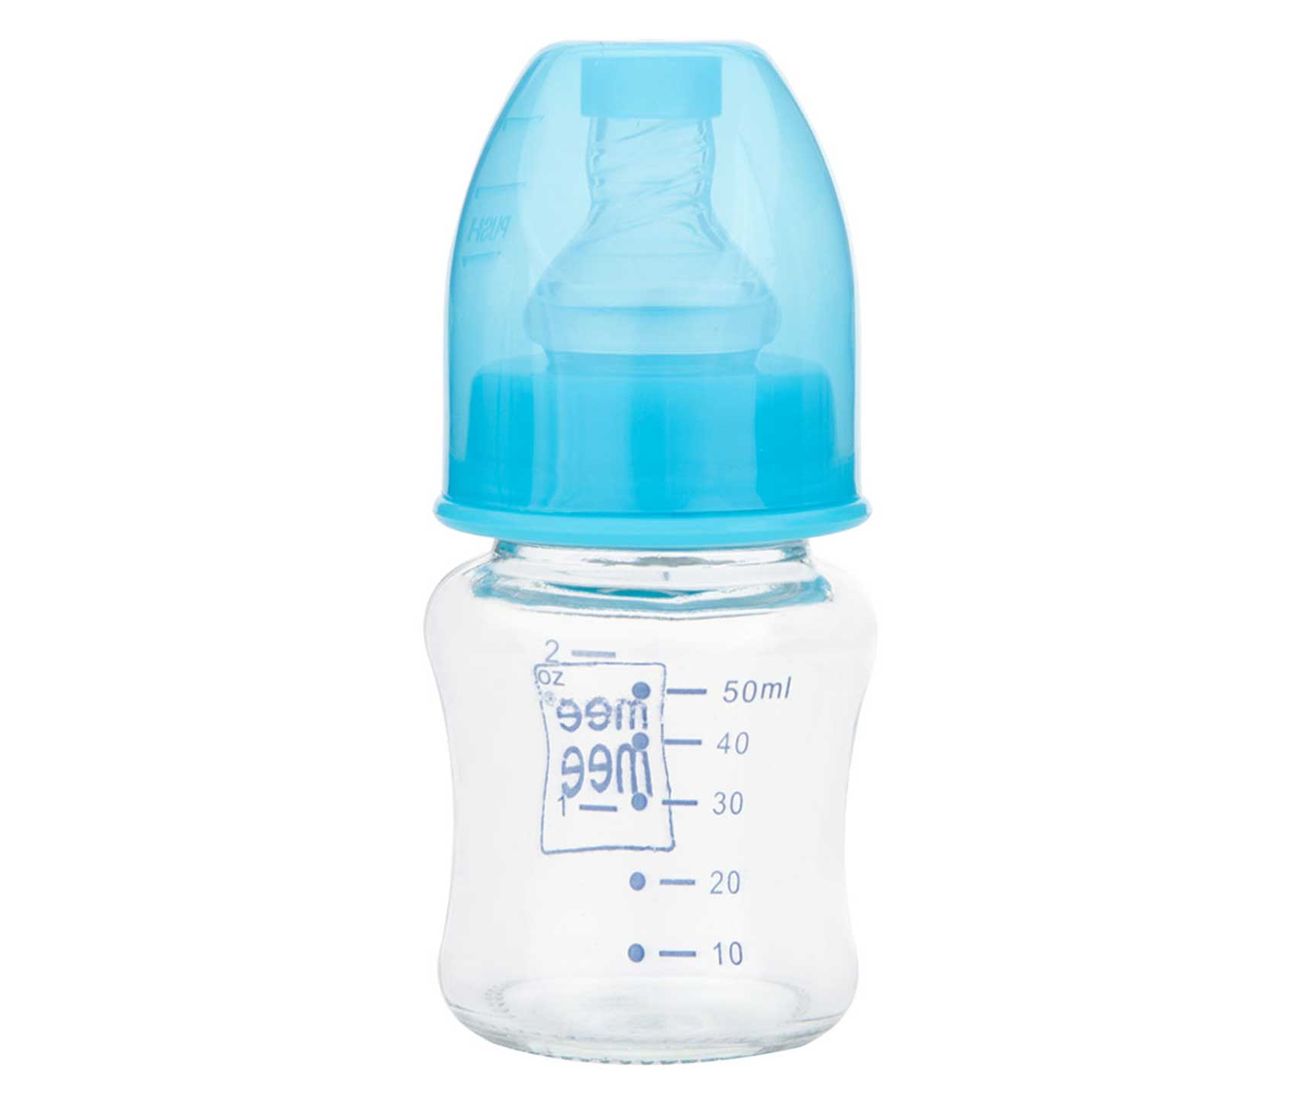 MEE MEE Premium glass feeding bottle for babies